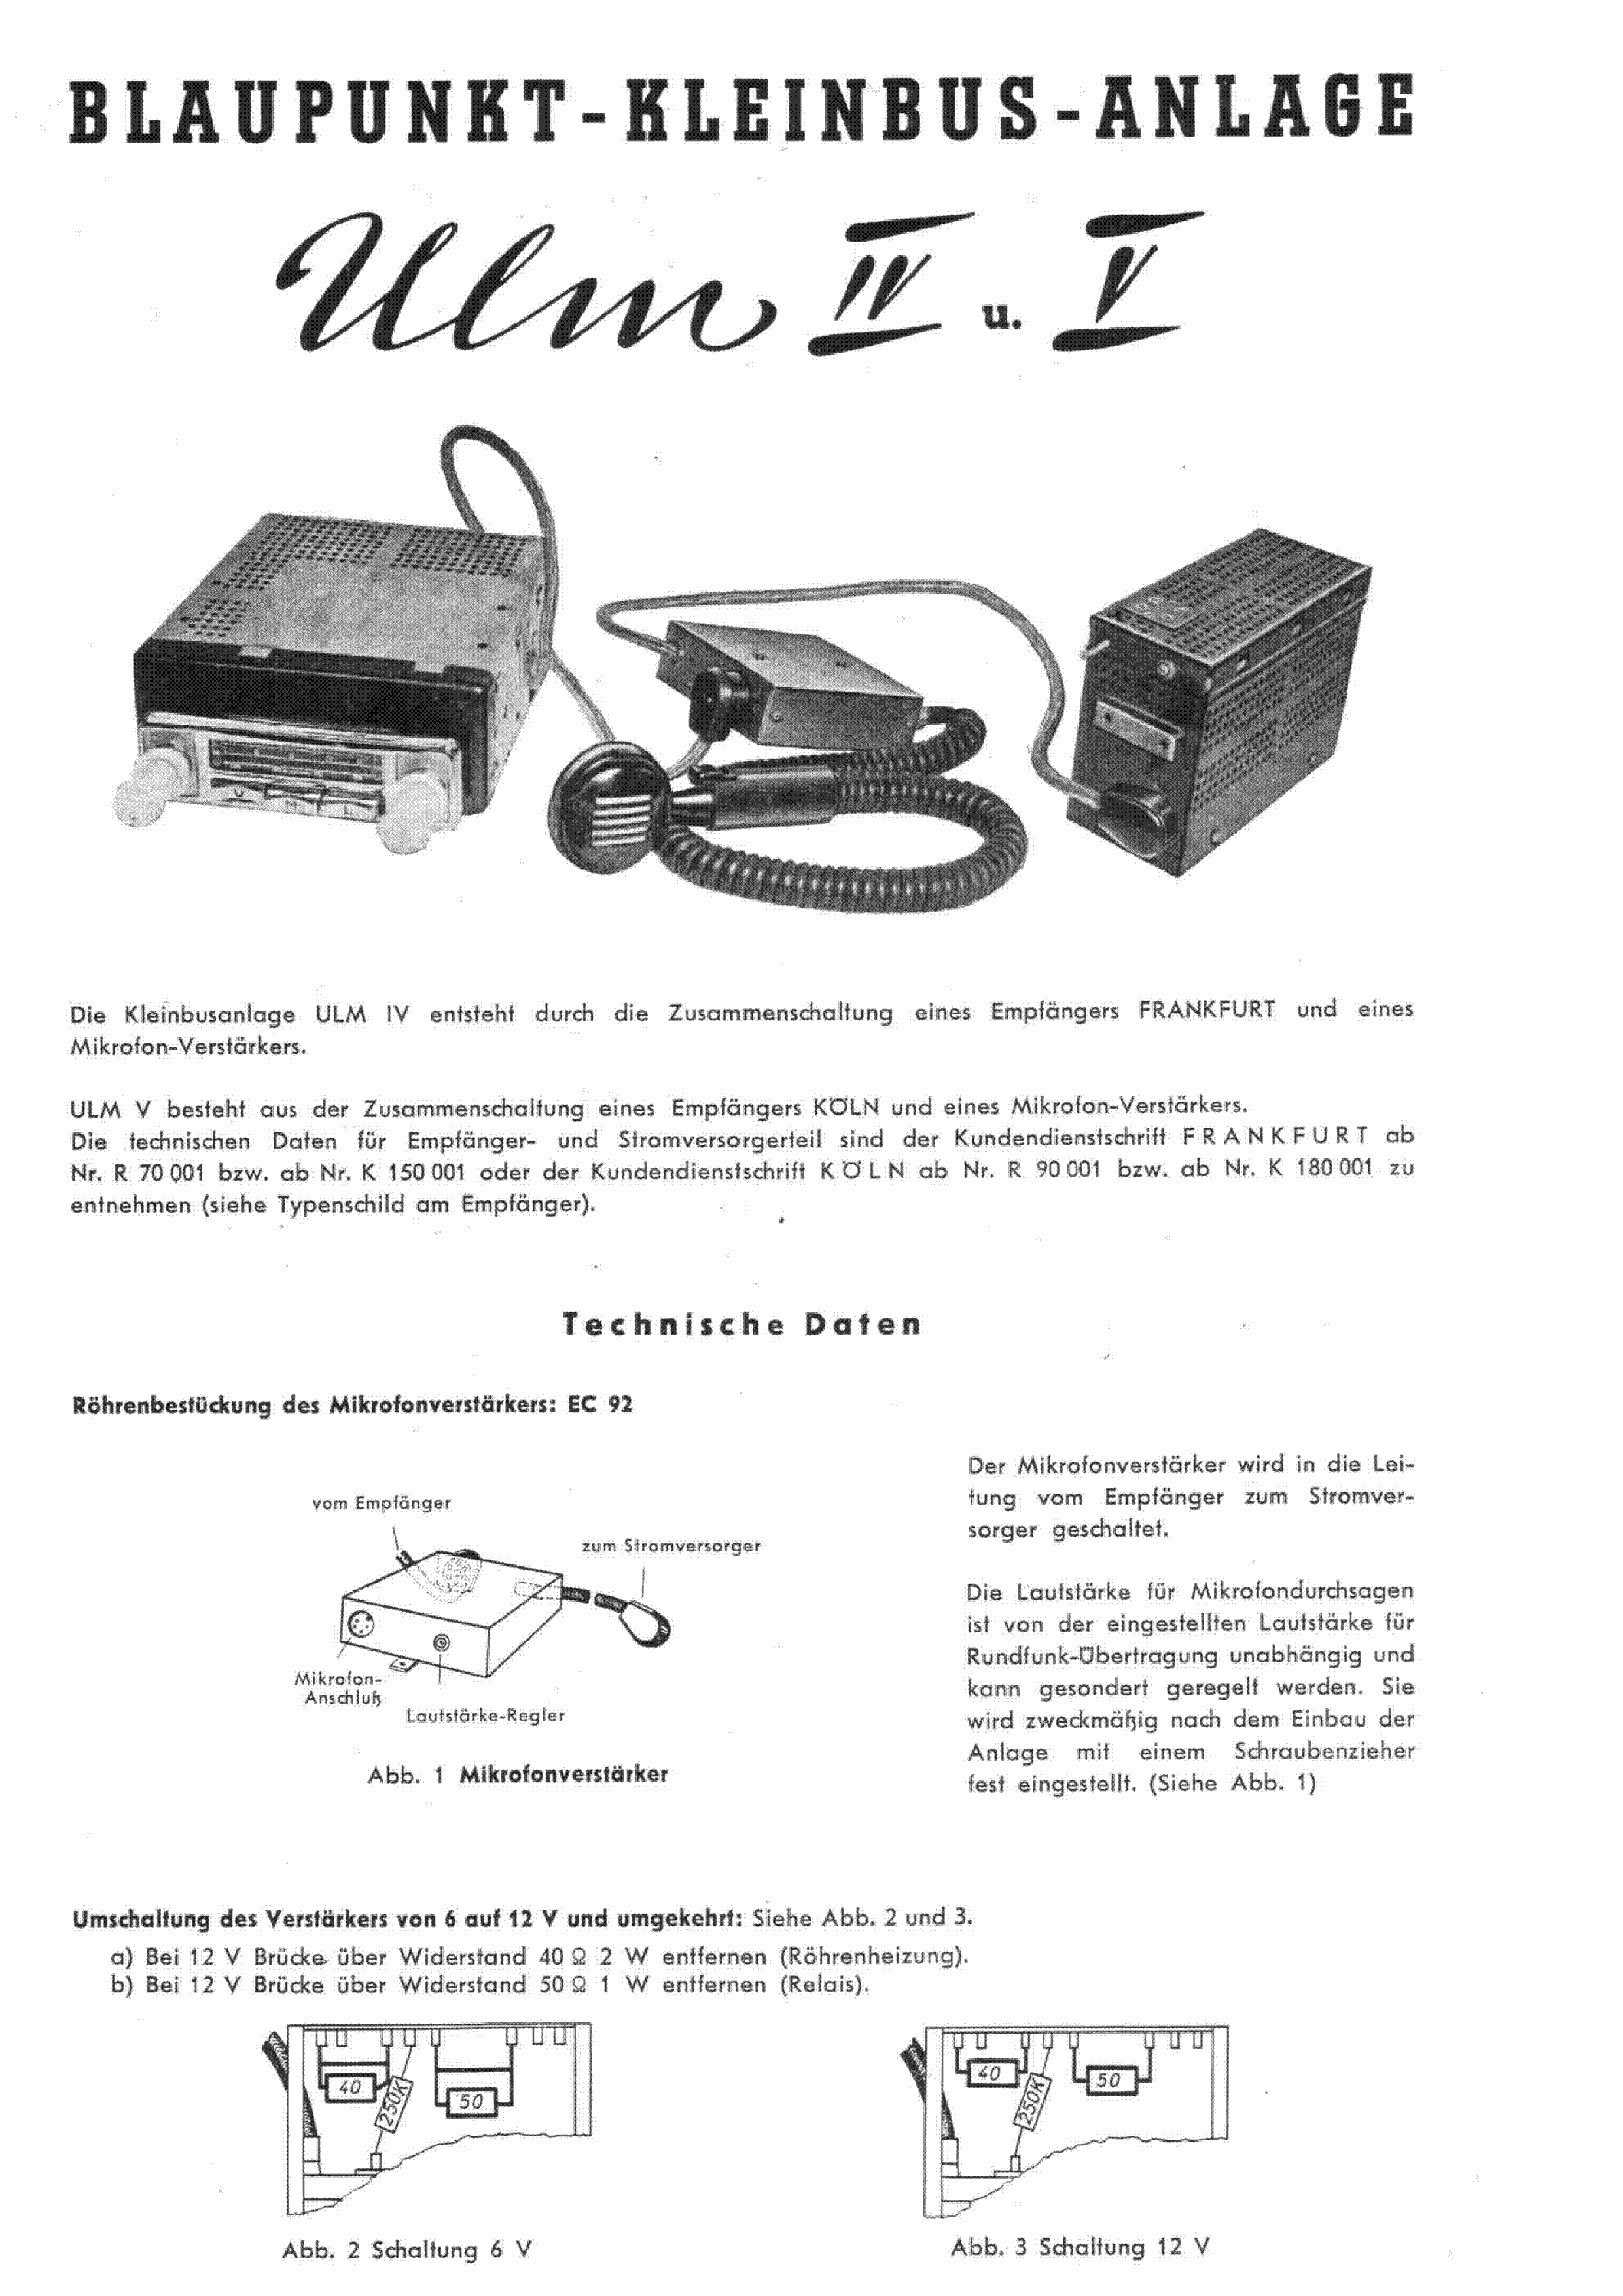 BLAUPUNKT ULM IV V service manual (1st page)